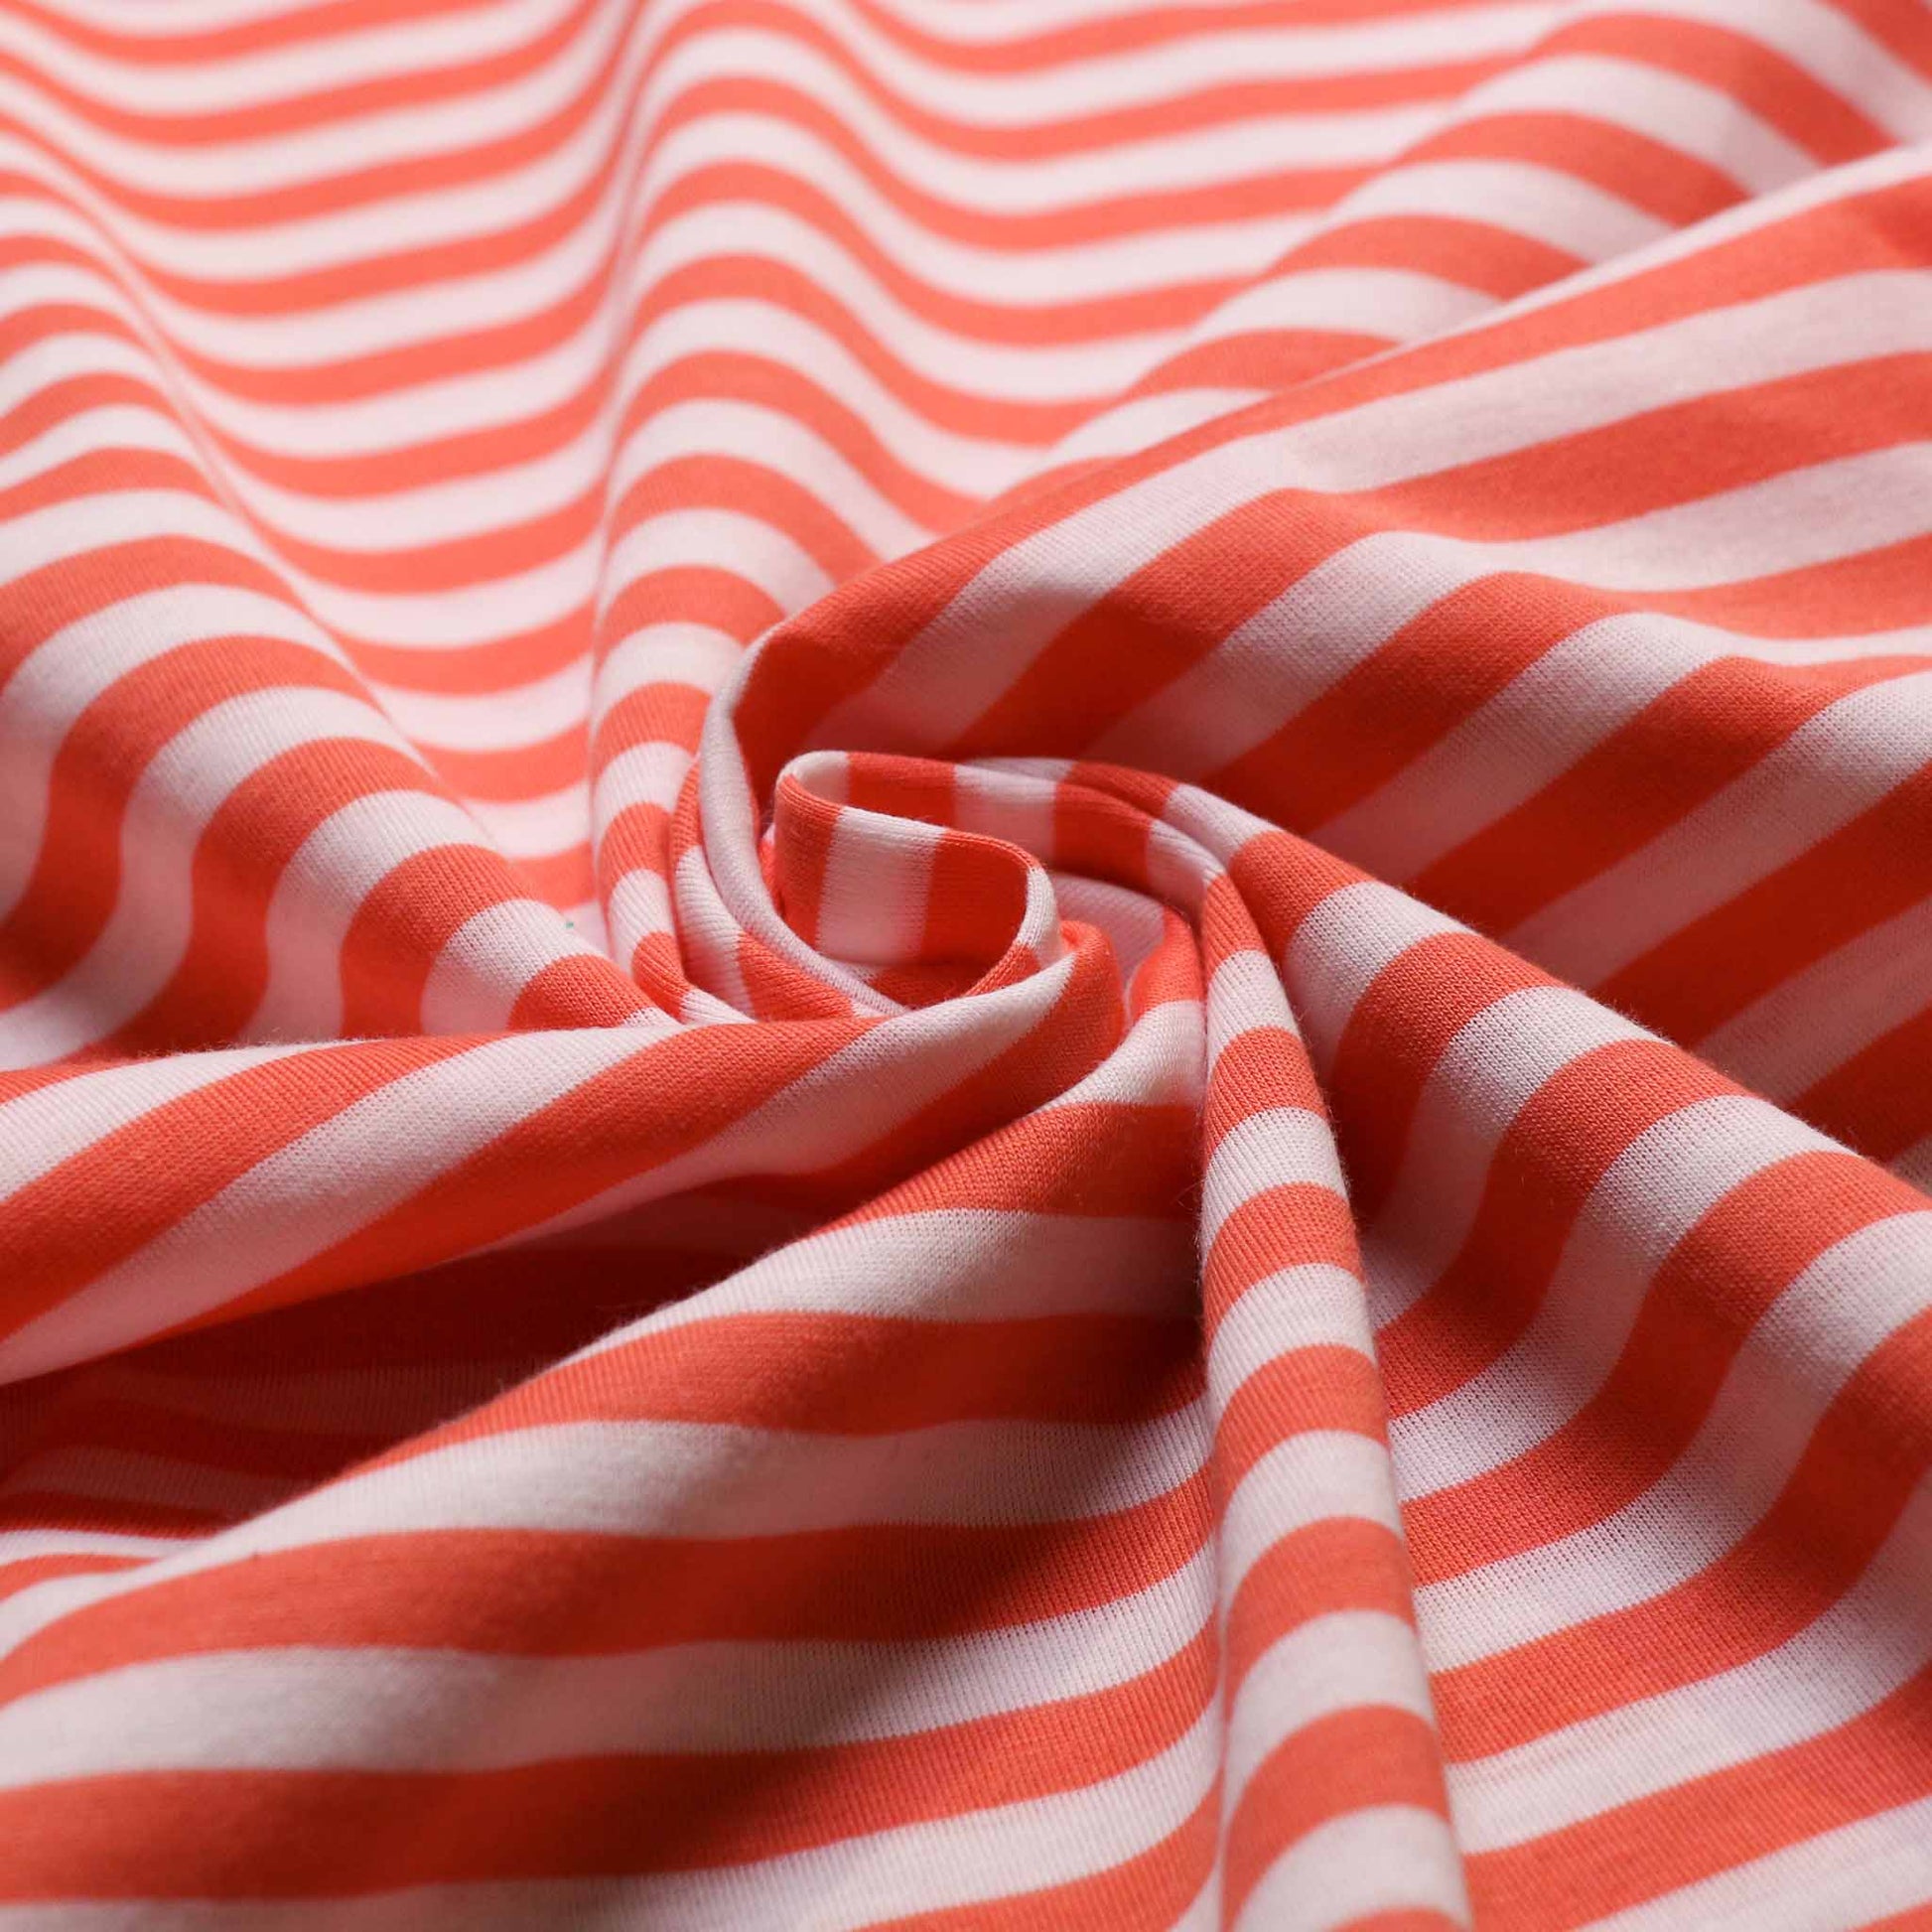 cloth control coral striped orange polycotton dressmaking jersey